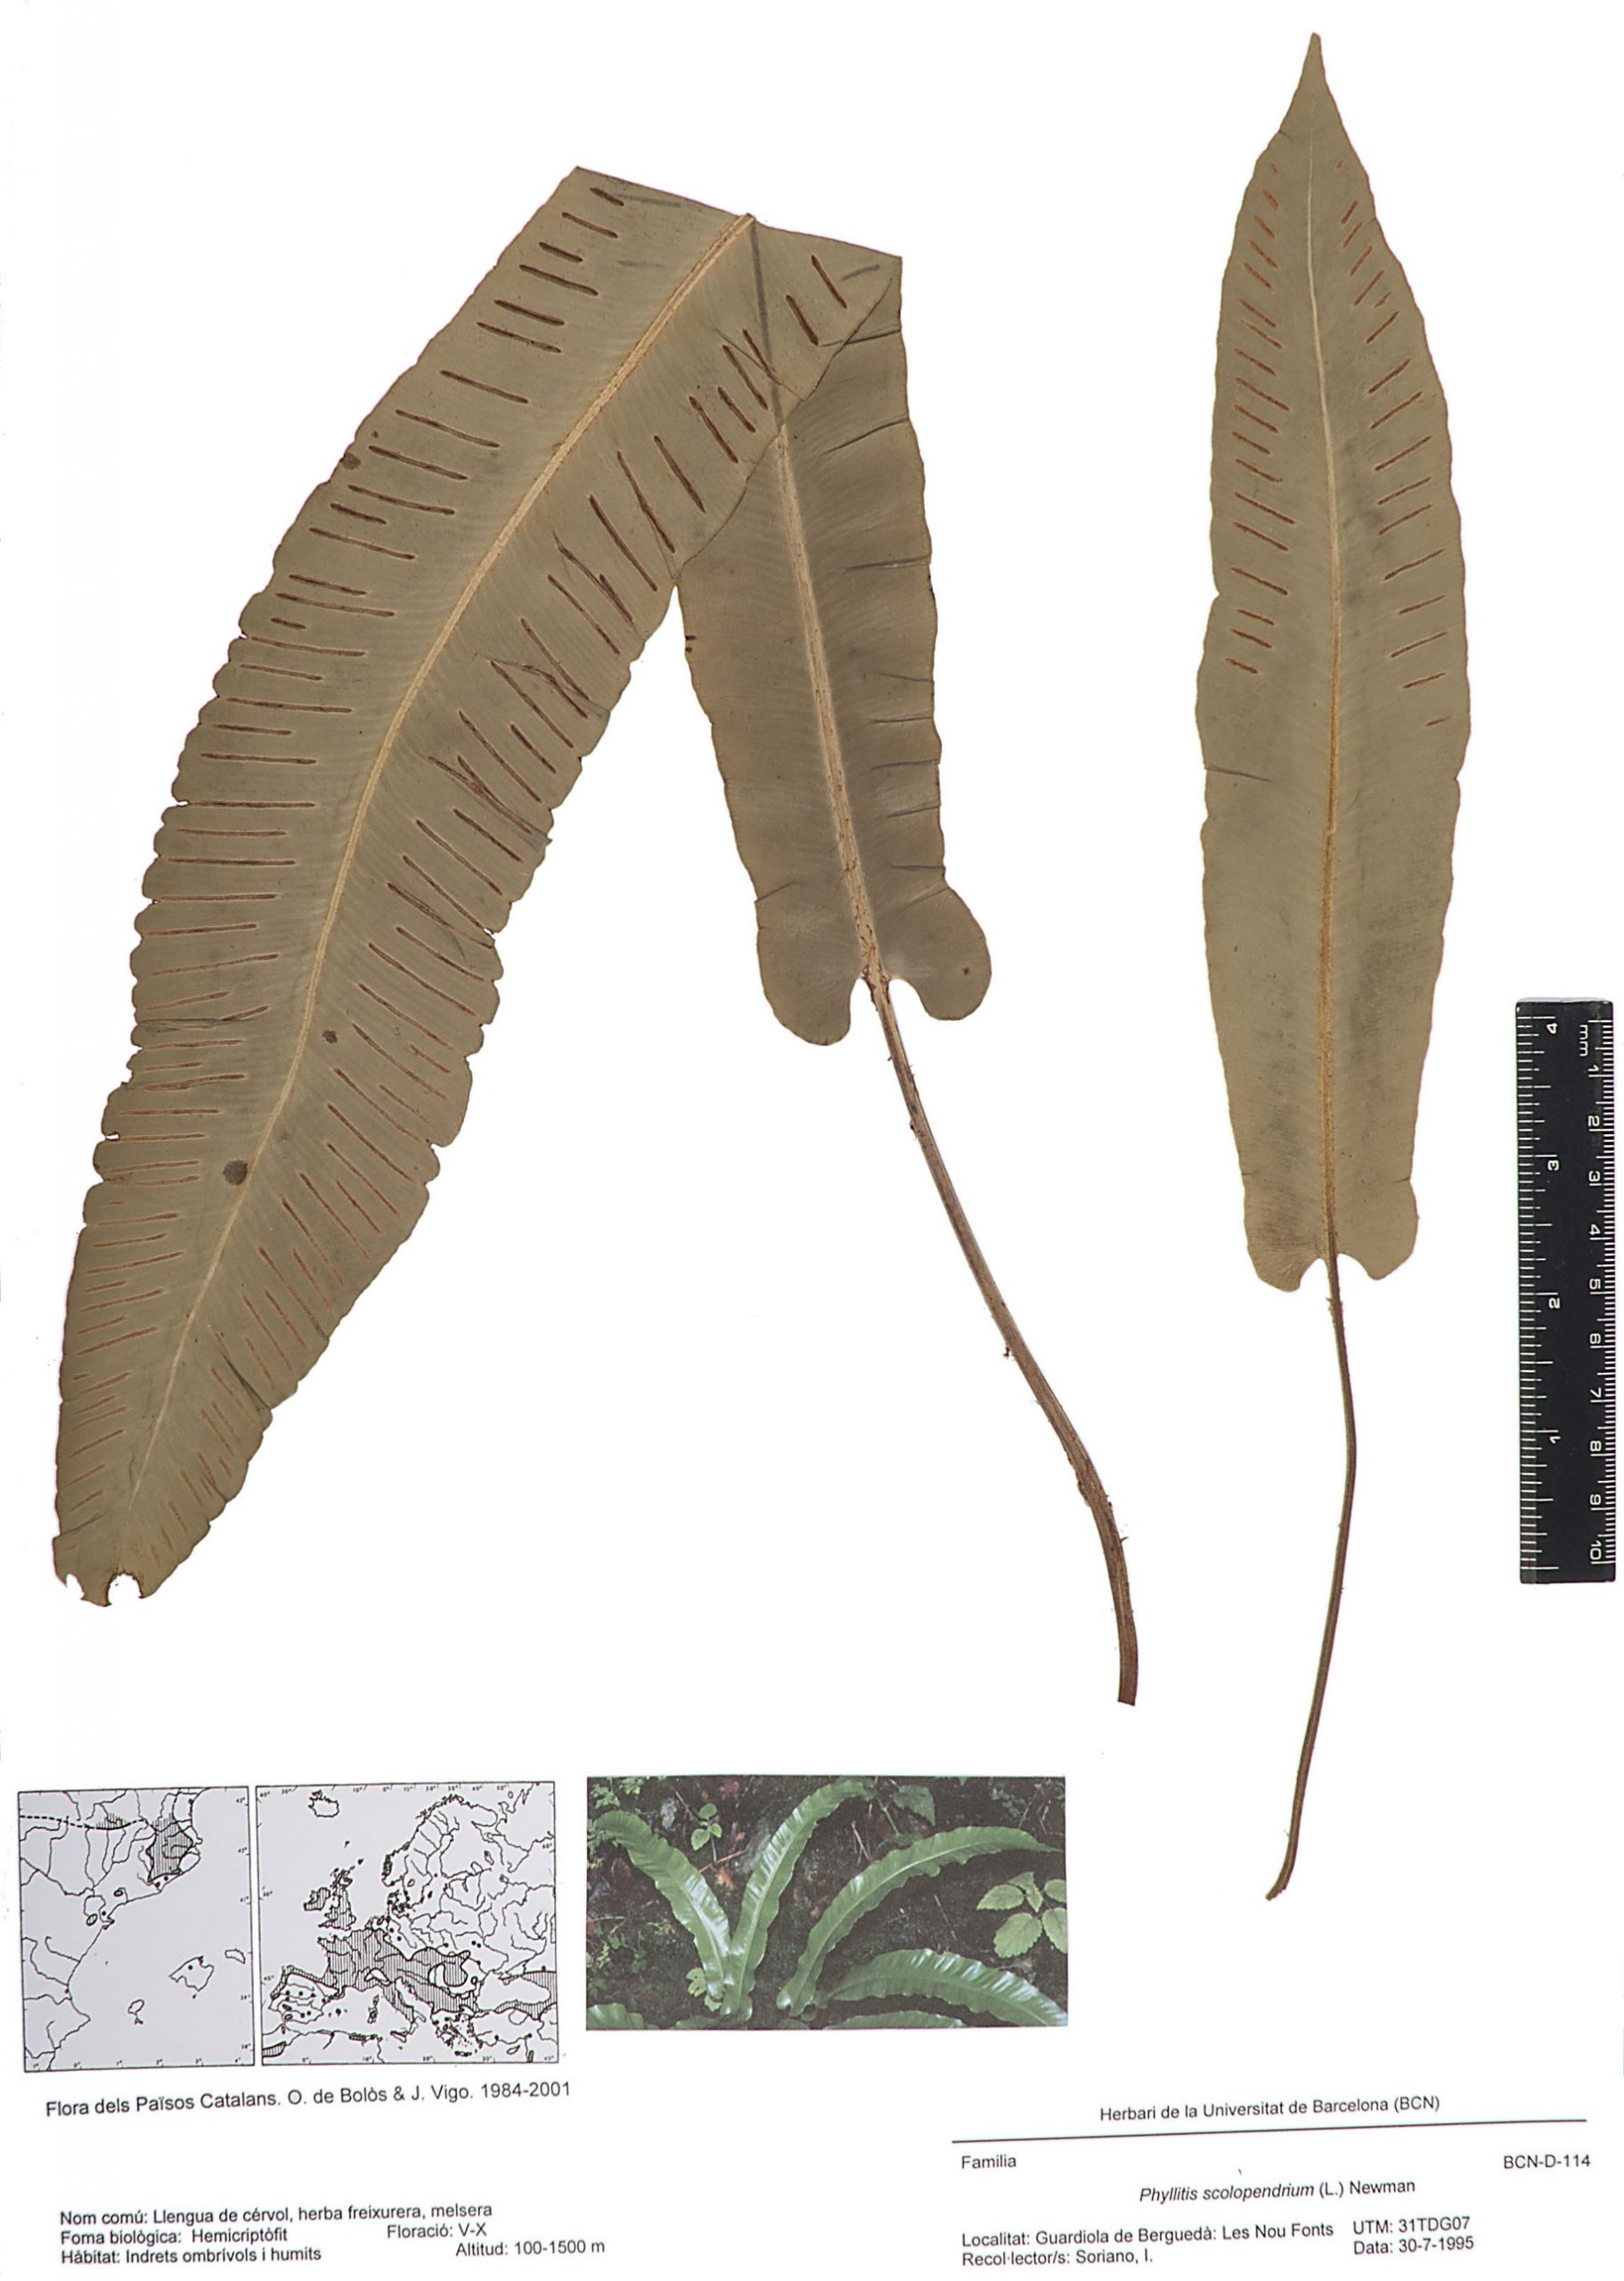 Phyllitis scolopendrium (L.) Newman (Llengua de cérvol, herba freixurera, melsera)